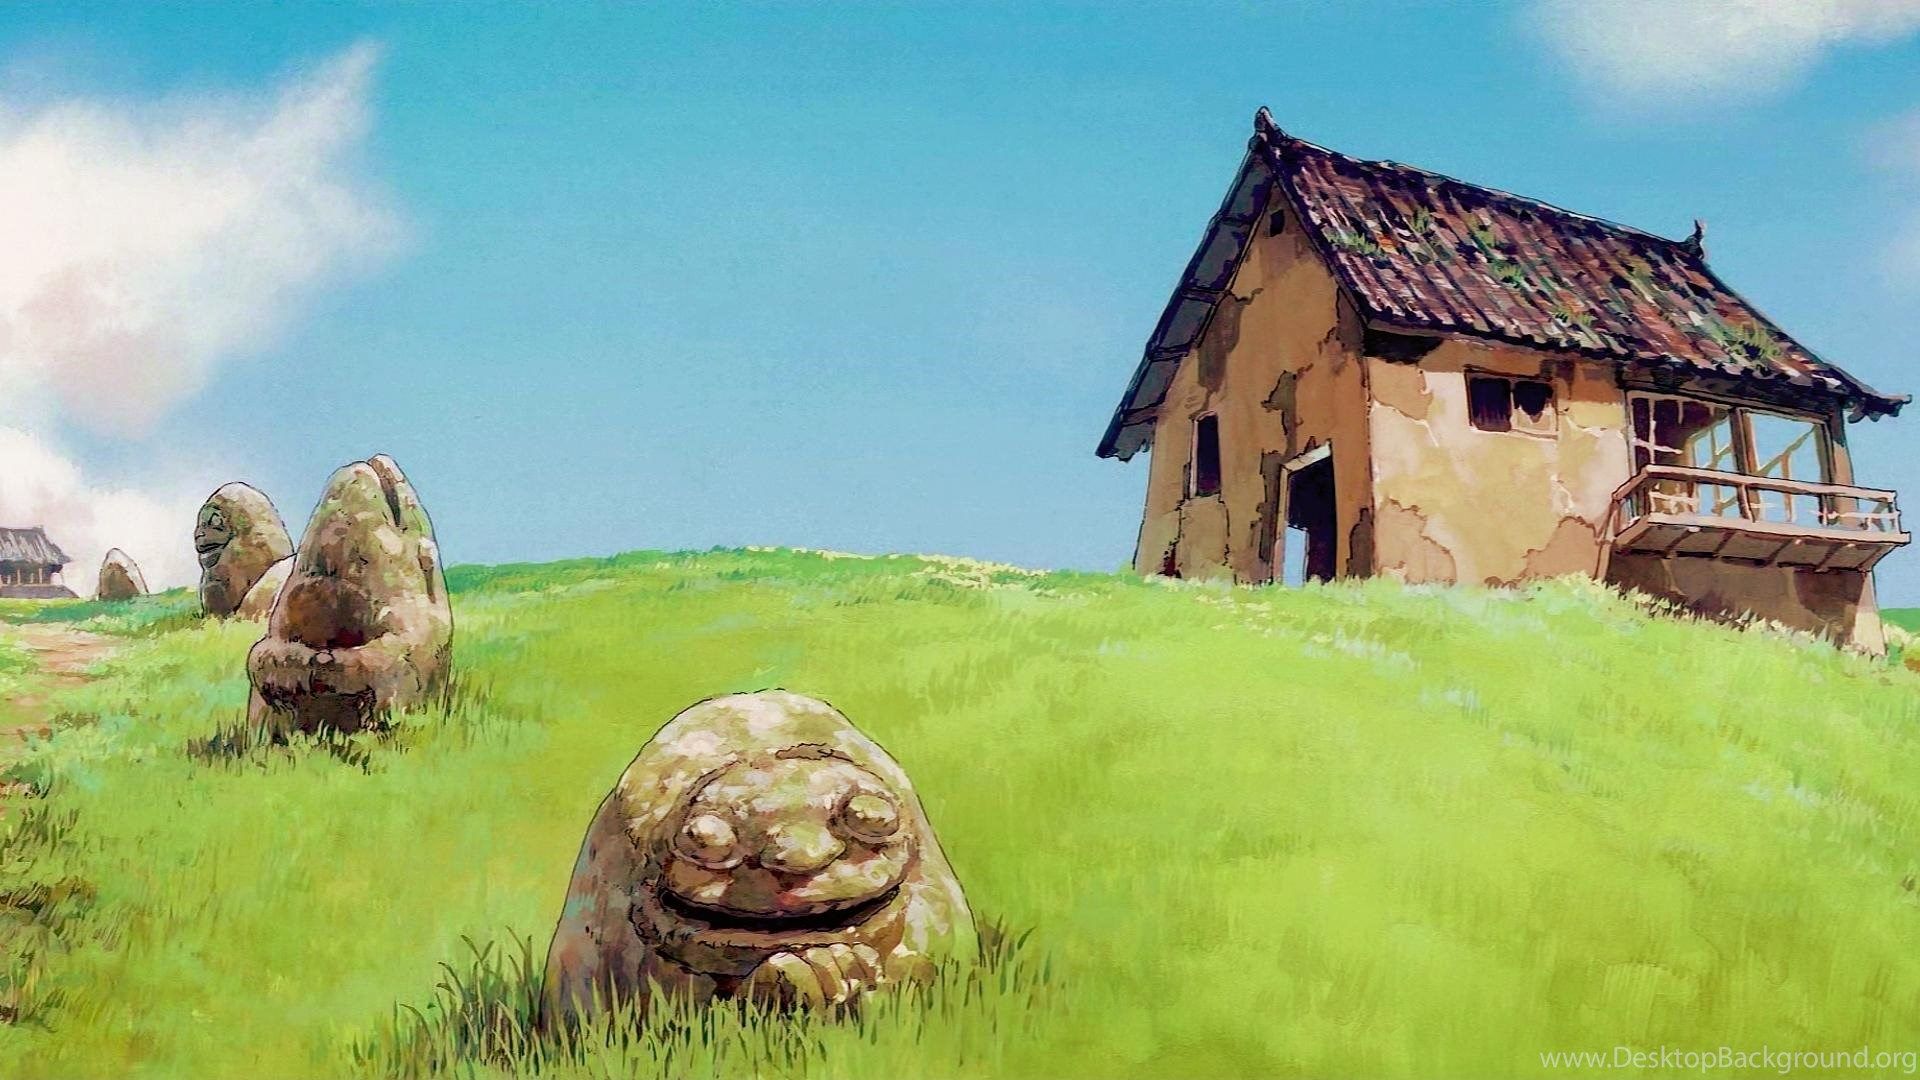 High Res 'dual Screen' Studio Ghibli Desktop Wallpaper! Desktop Background